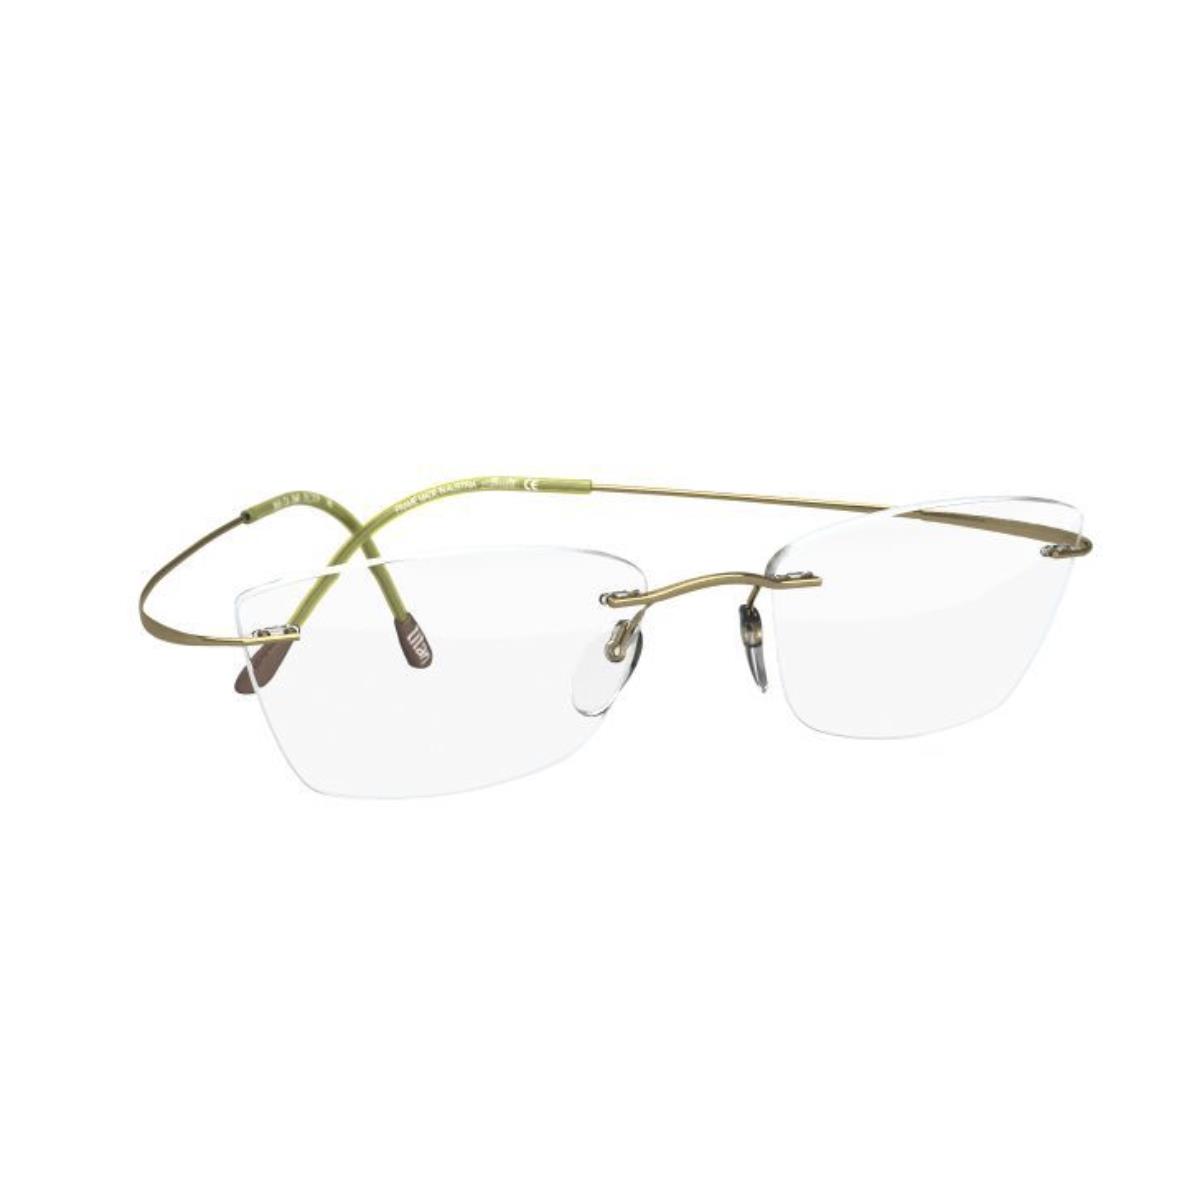 Silhouette Rimless Eyeglasses Titan Minimal Art The Must Collection Frames MOSS - 5540, SIZE: 51-17 140, SHAPE - CX